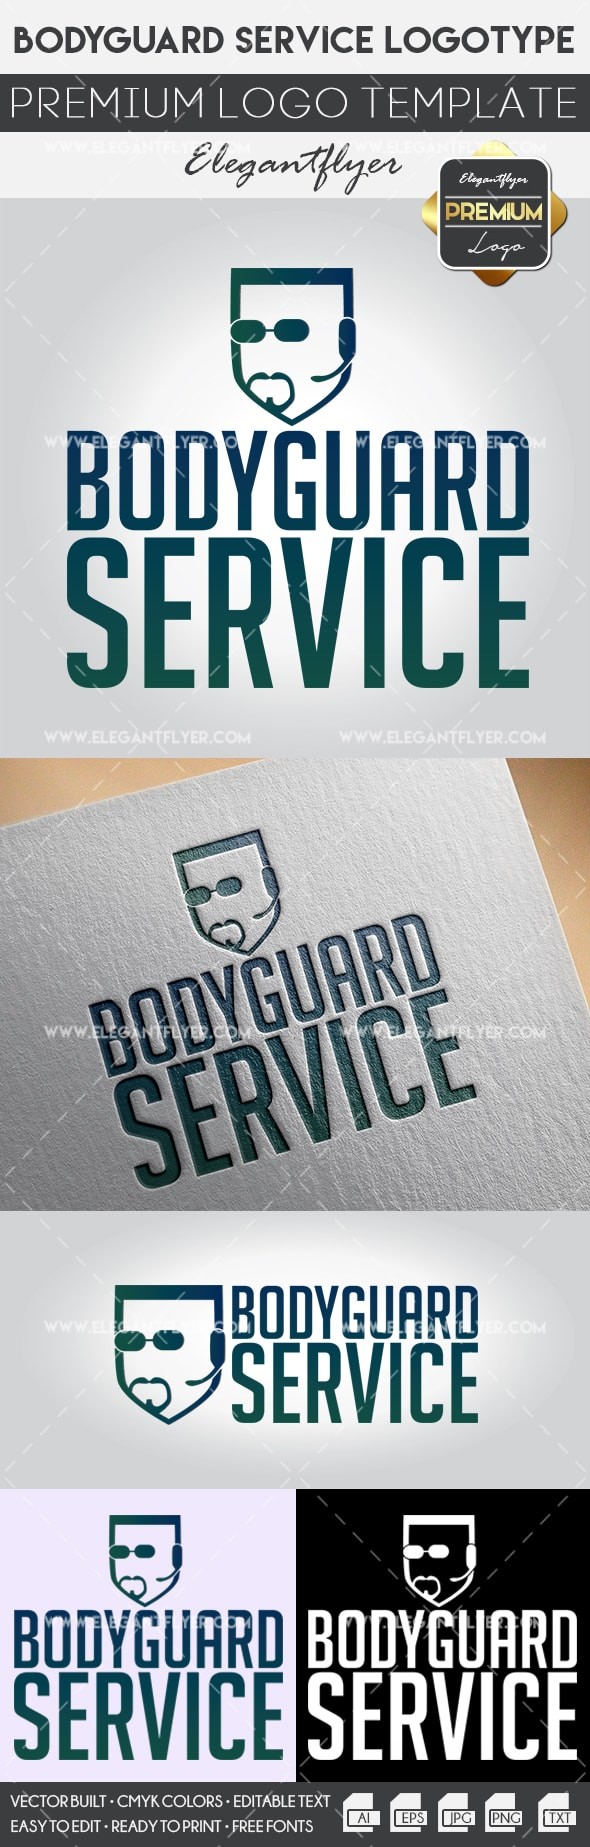 Servizio di Bodyguard by ElegantFlyer